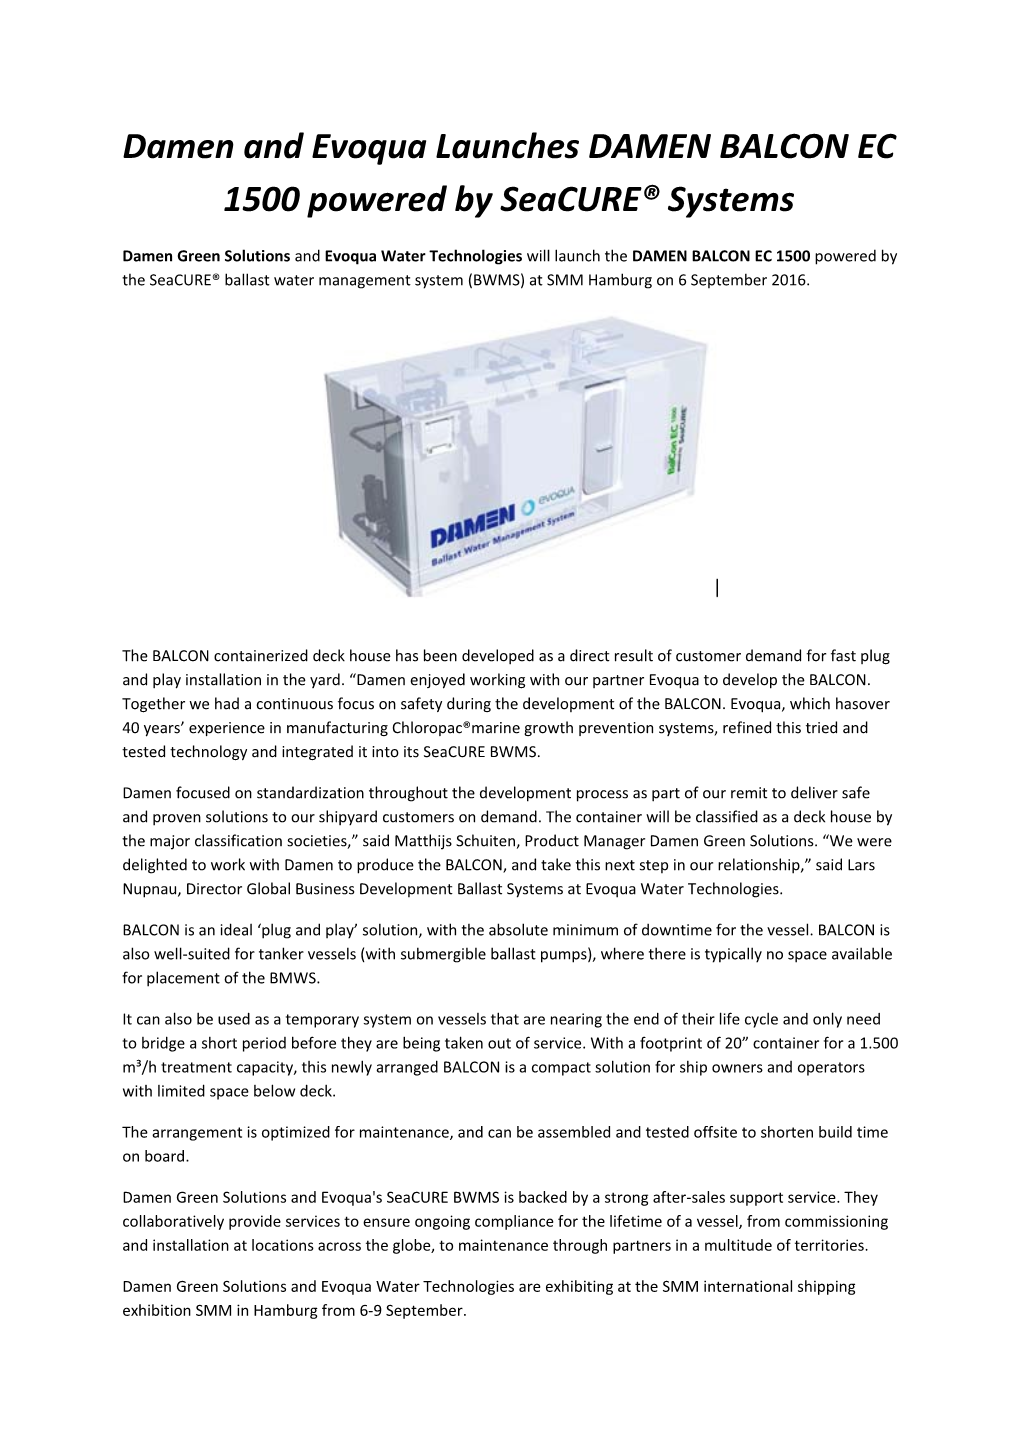 Damen and Evoqua Launches DAMEN BALCON EC 1500 Powered by Seacure Systems